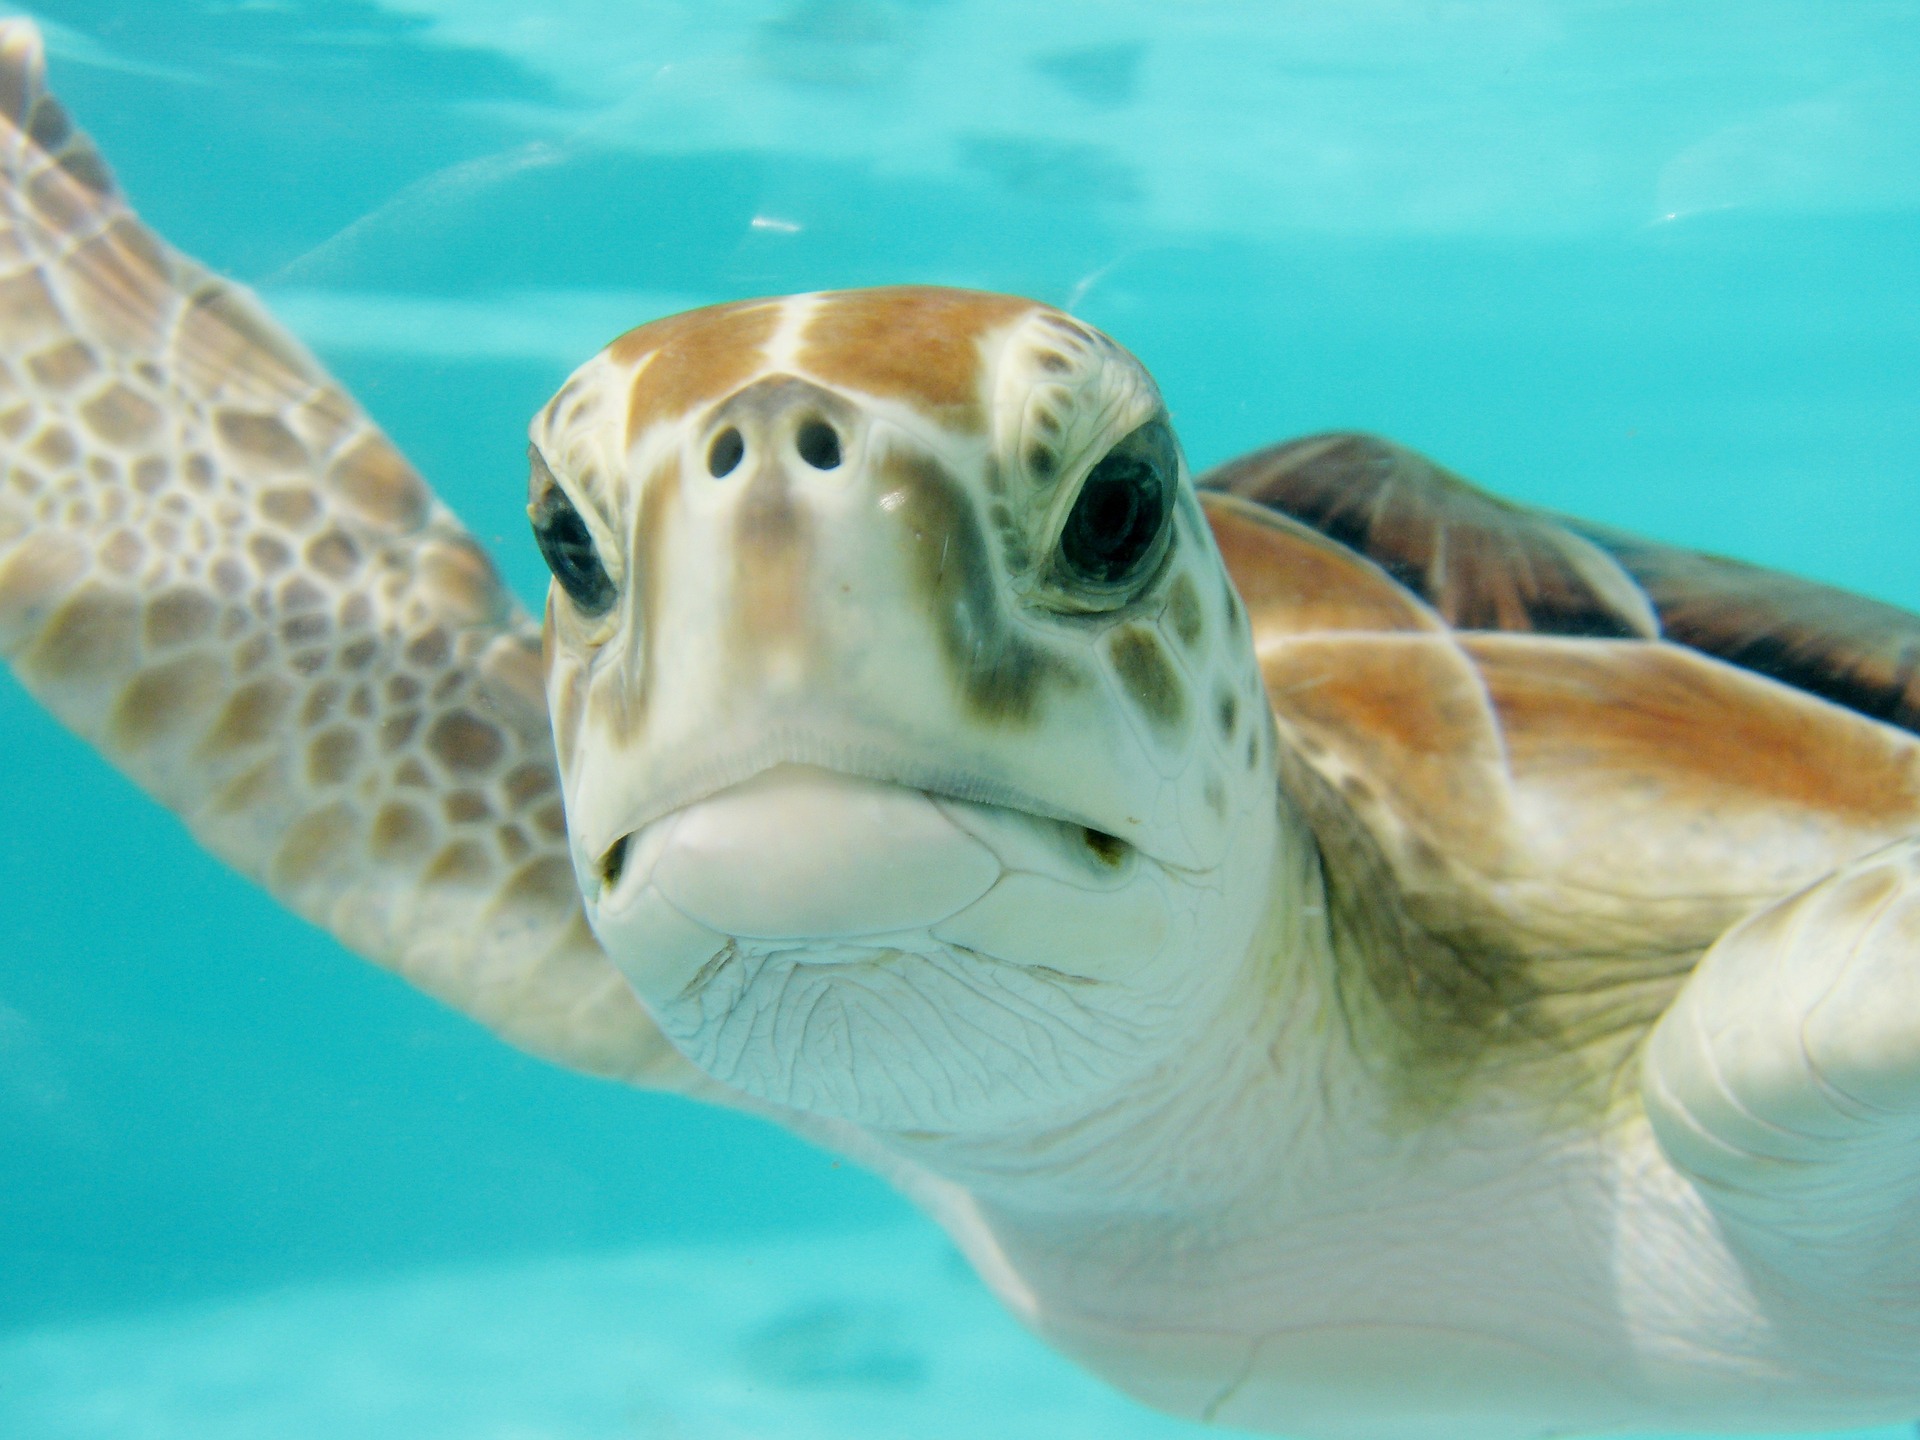 NHES Visits Alliance Partner Network for Endangered Sea Turtles (N.E.S